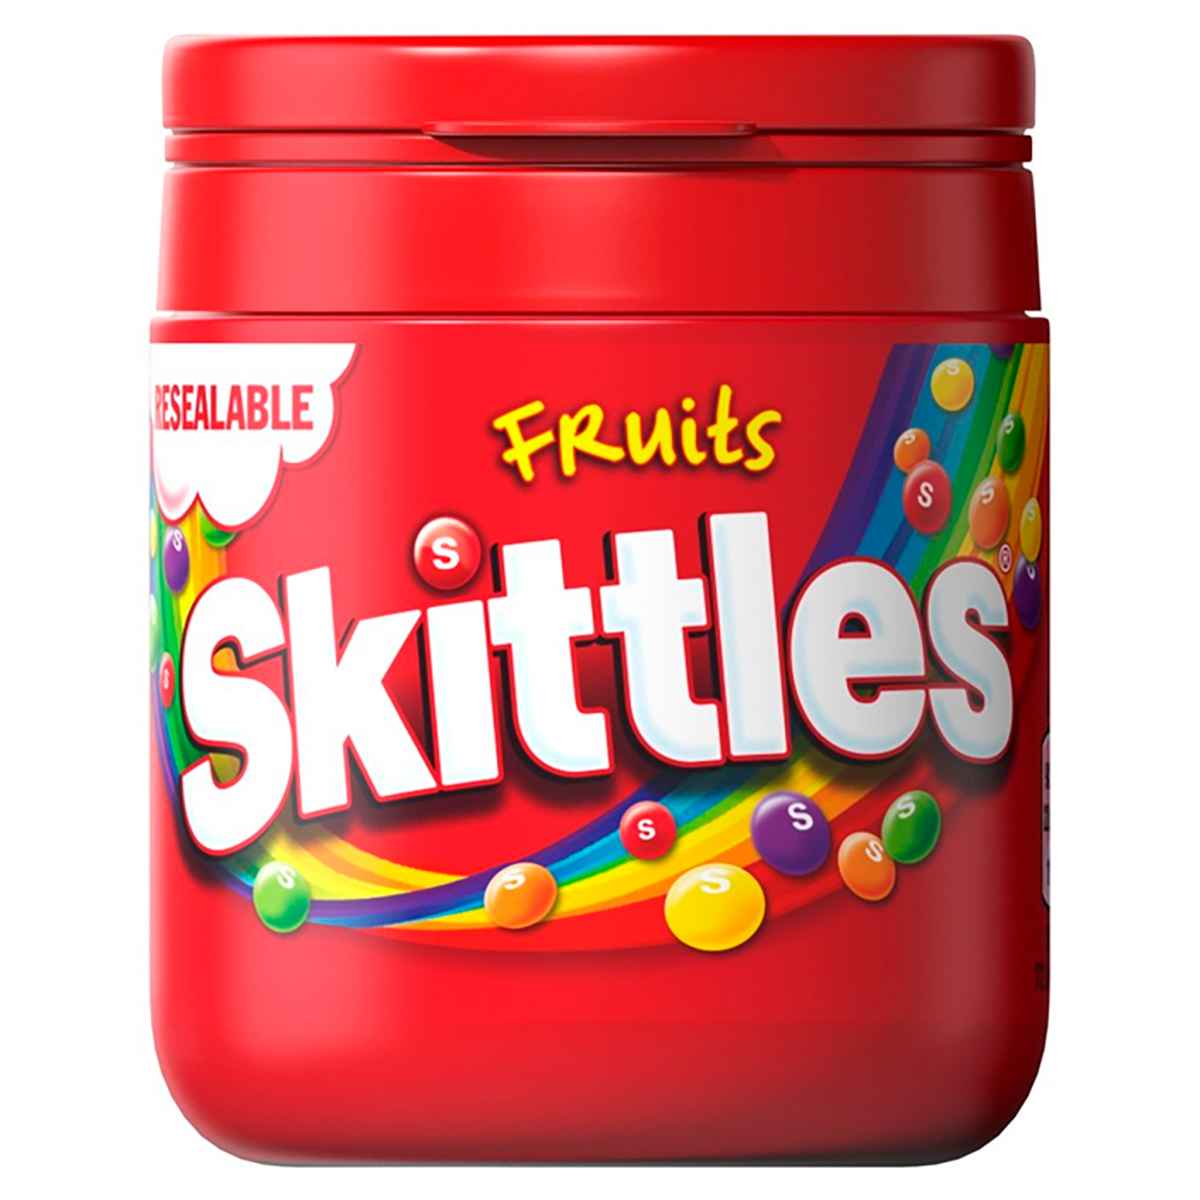 Драже Skittles Fruits Dose, 125 г